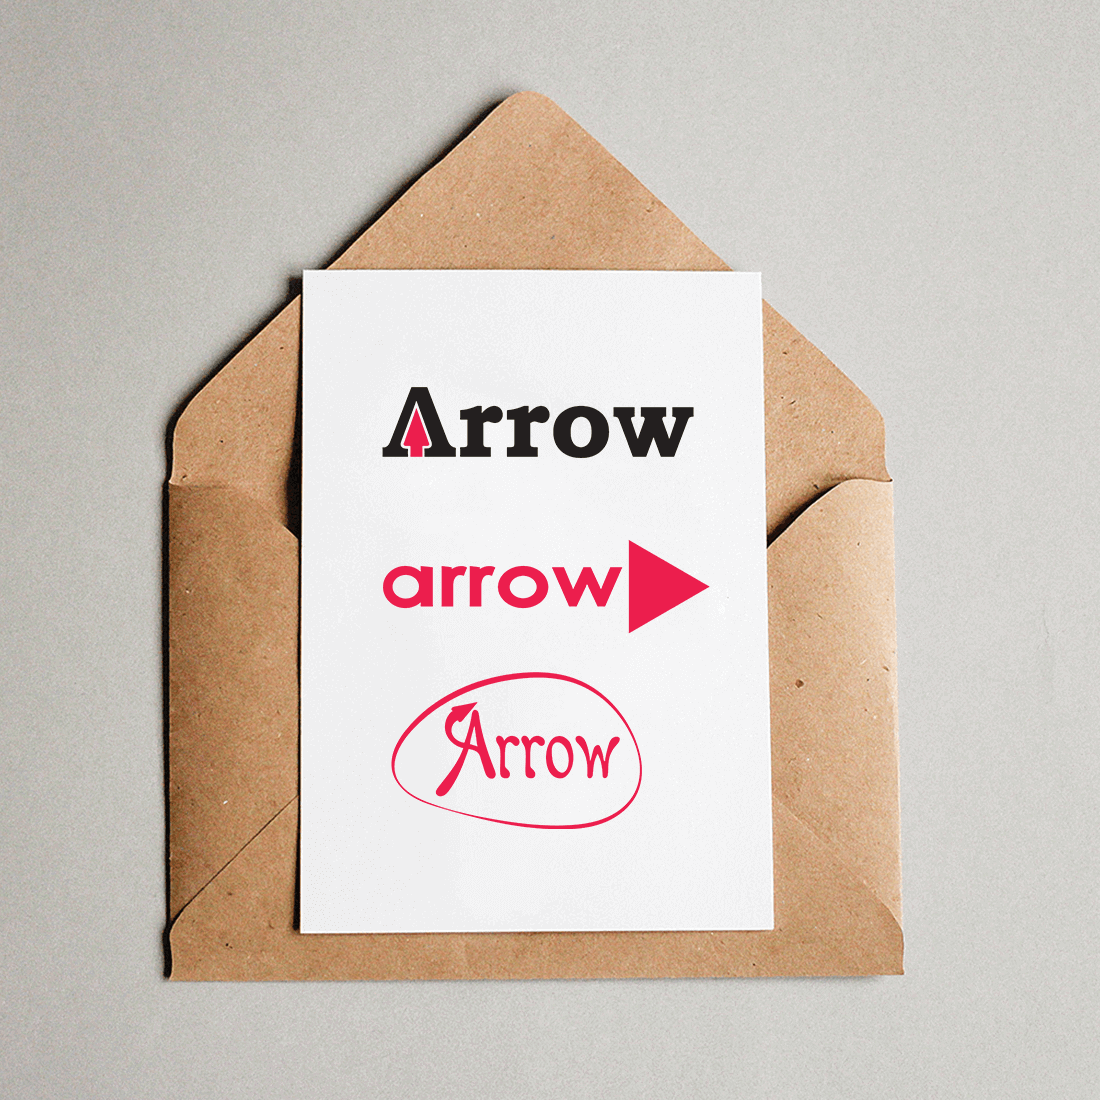 Arrow 3 Different Logo Design Bundle 3 In 1 Logo Sets.